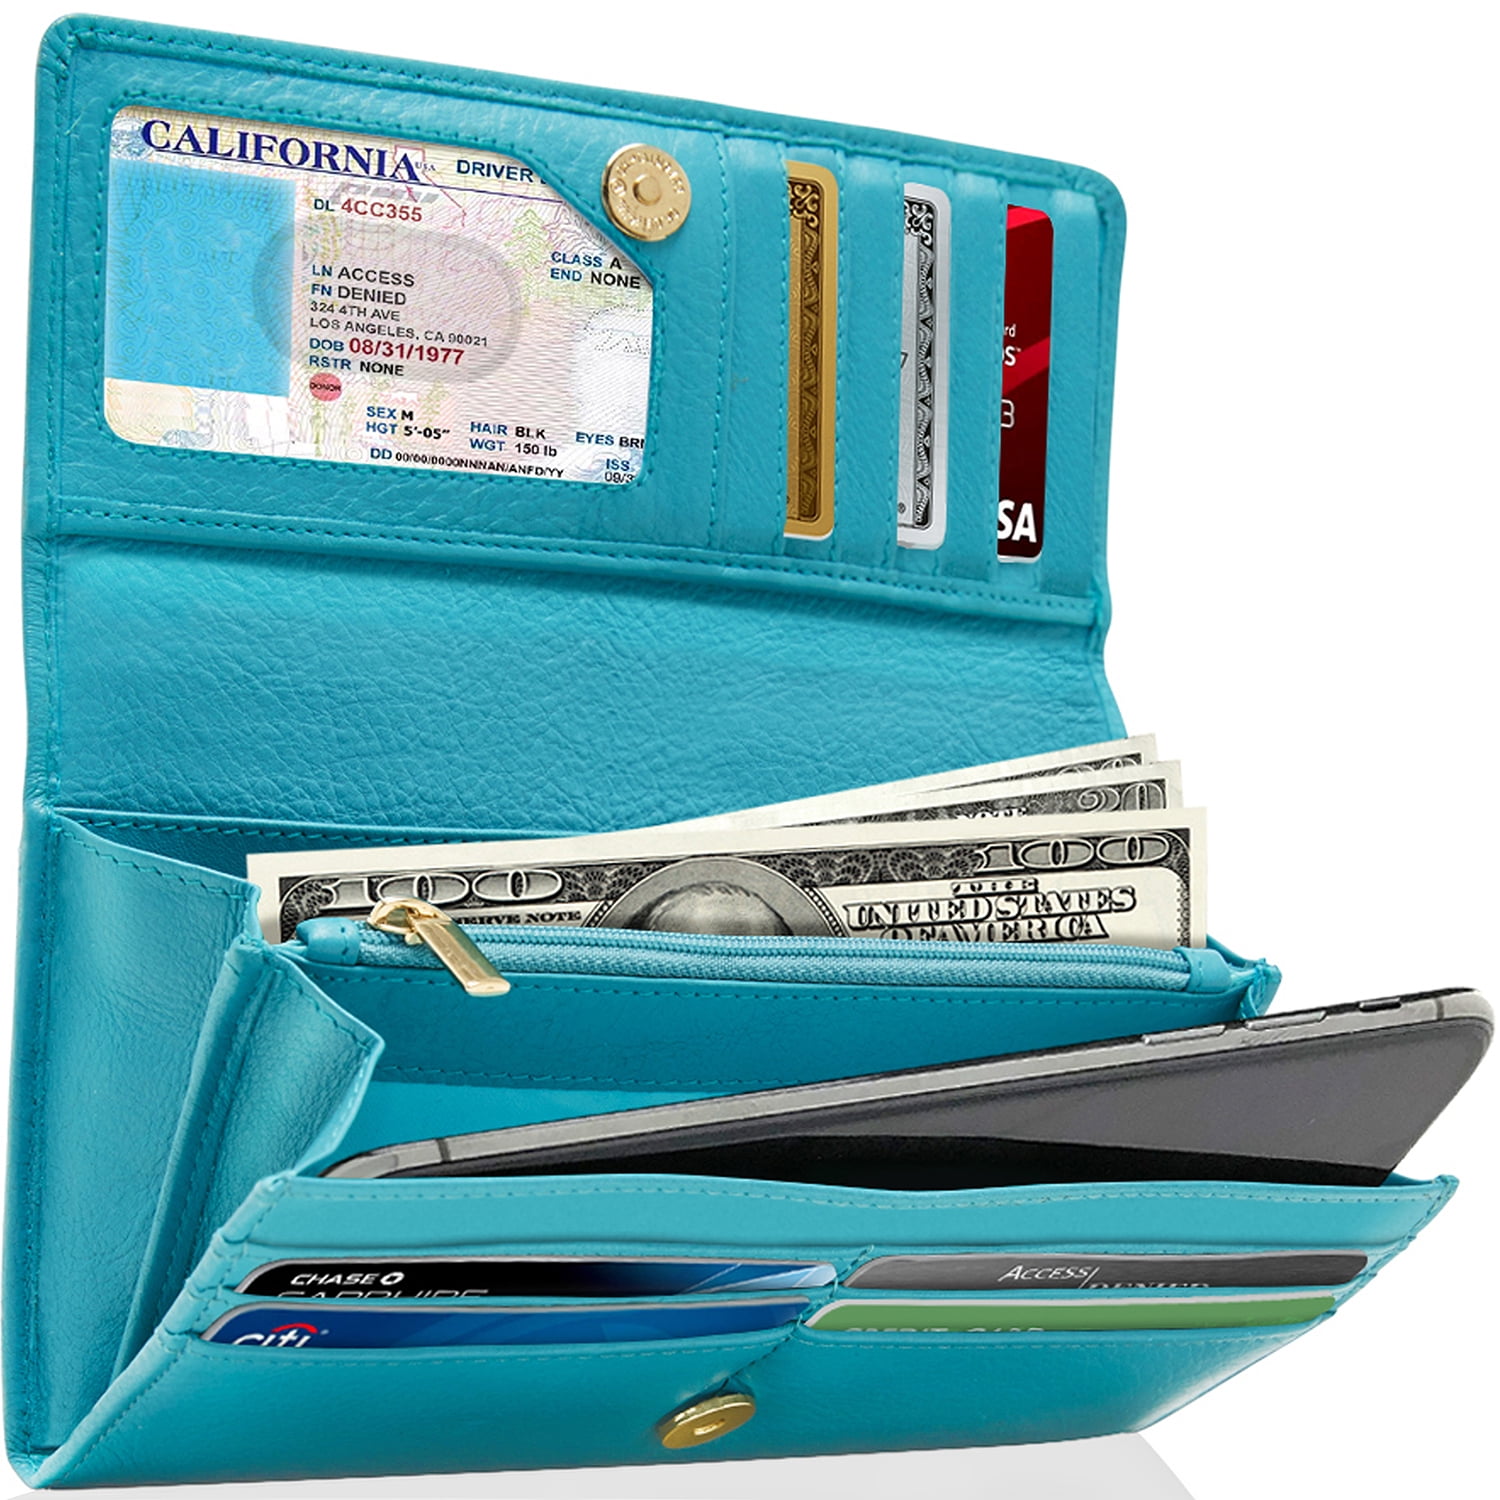 Access Denied - Genuine Leather Clutch Wallets For Women - Accordion Organizer Ladies Wallet ...